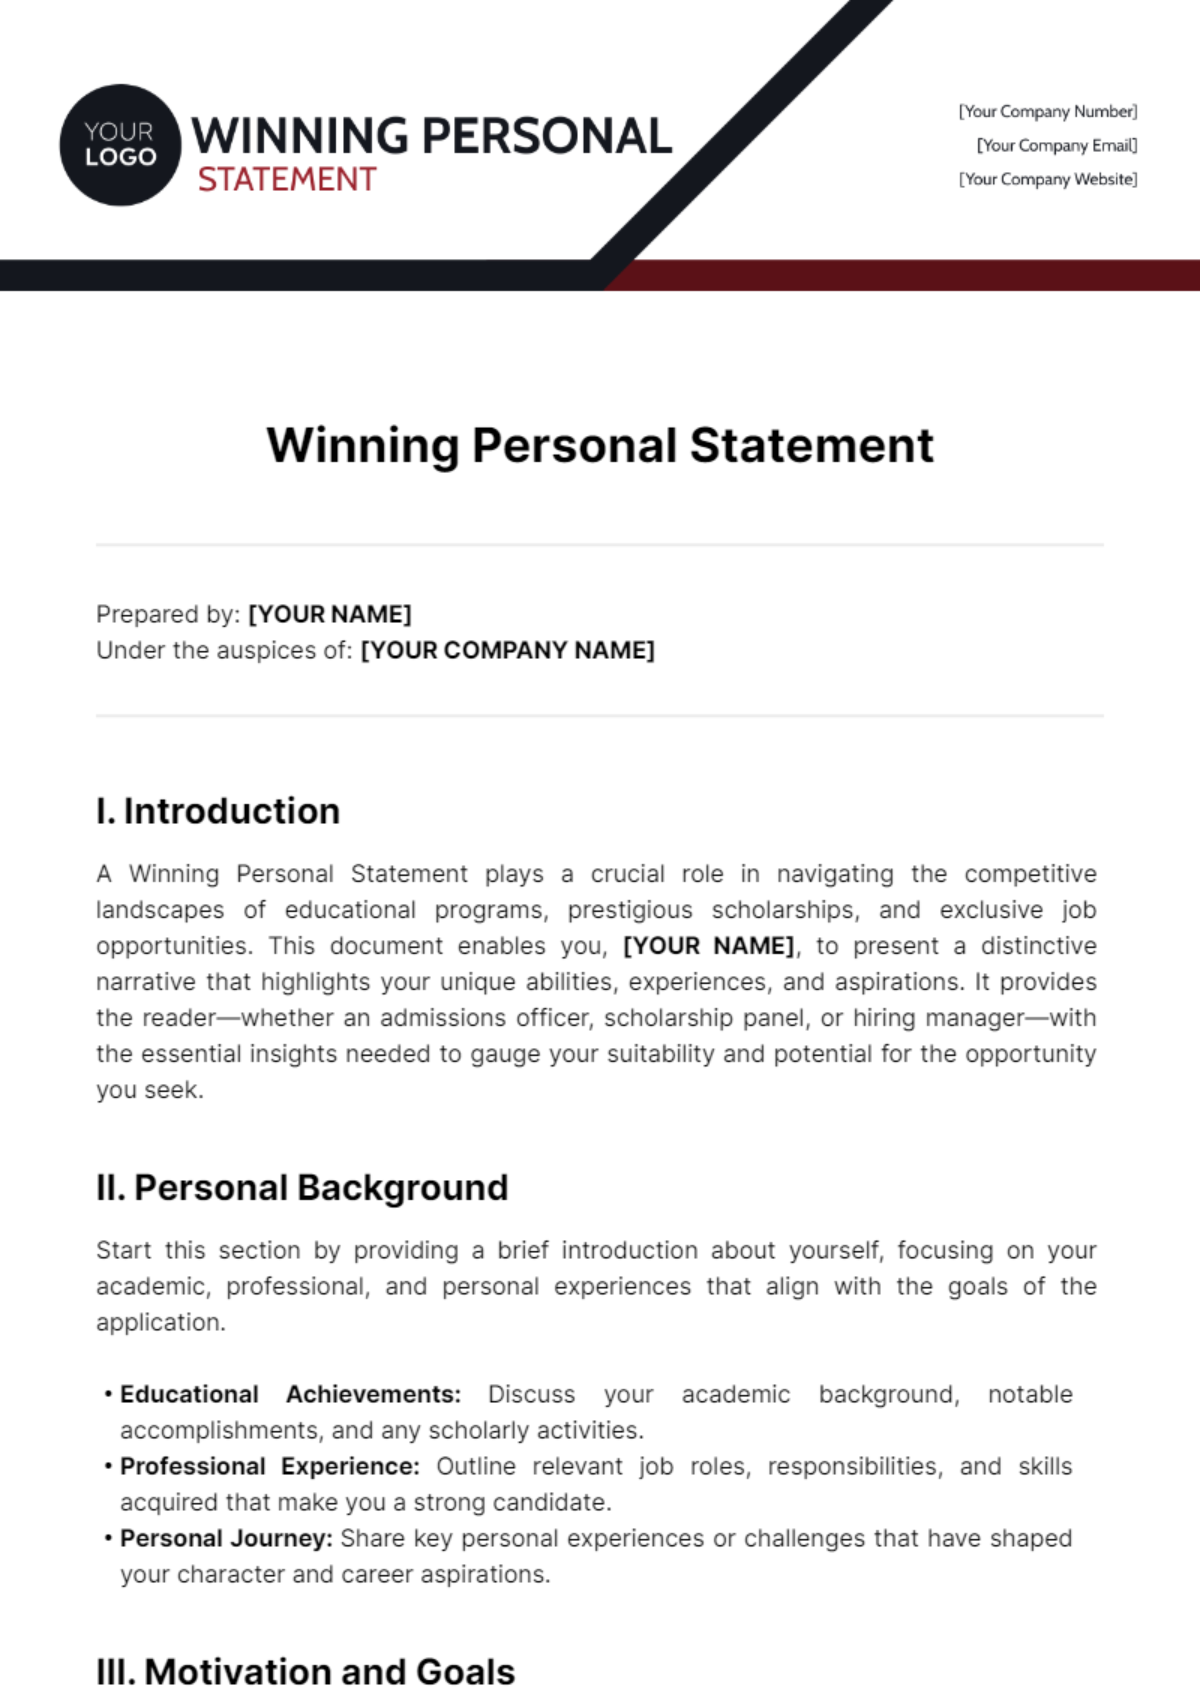 Winning Personal Statement Template